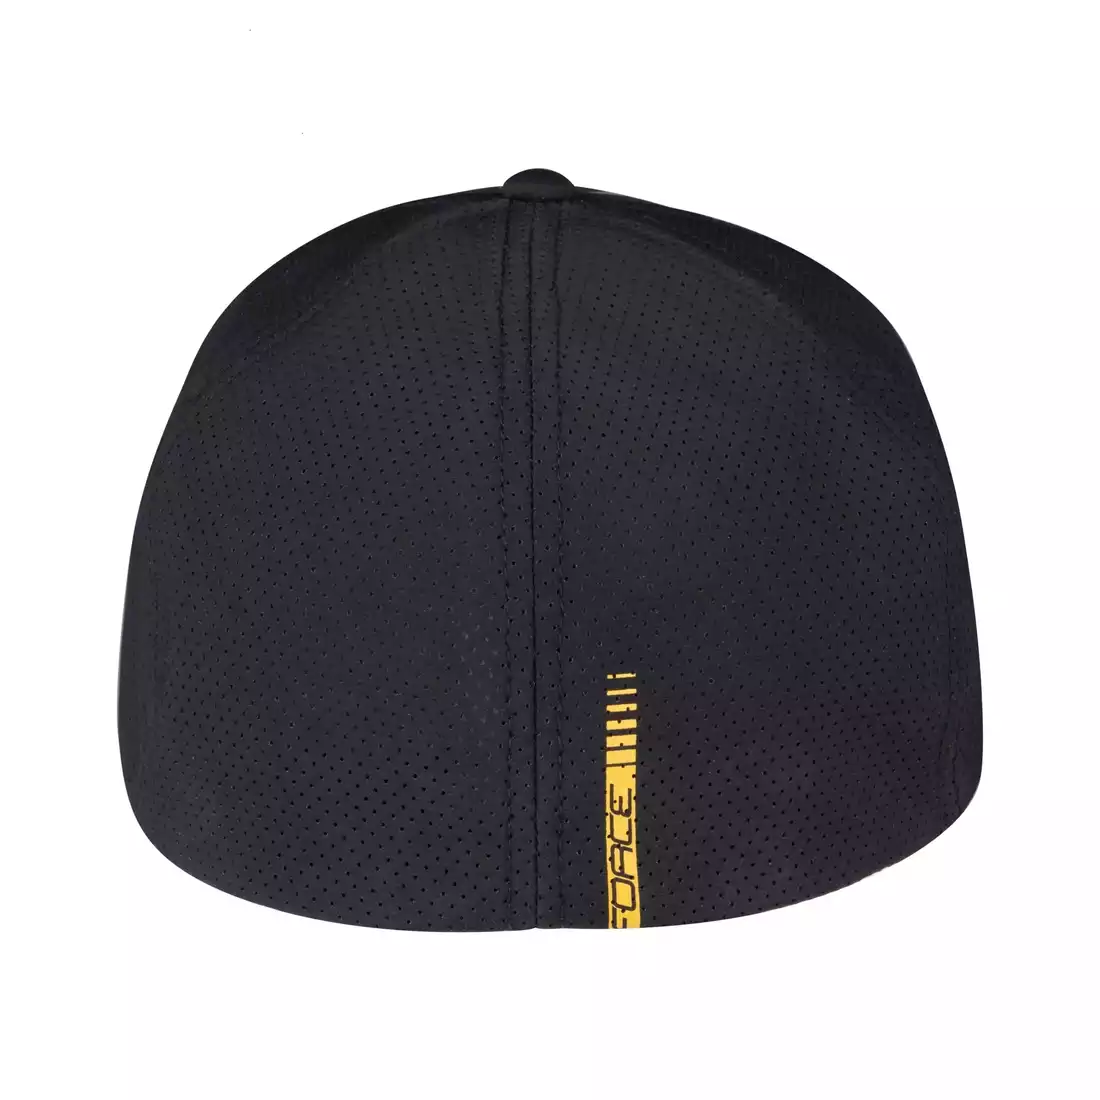 FORCE WOLF cap, black